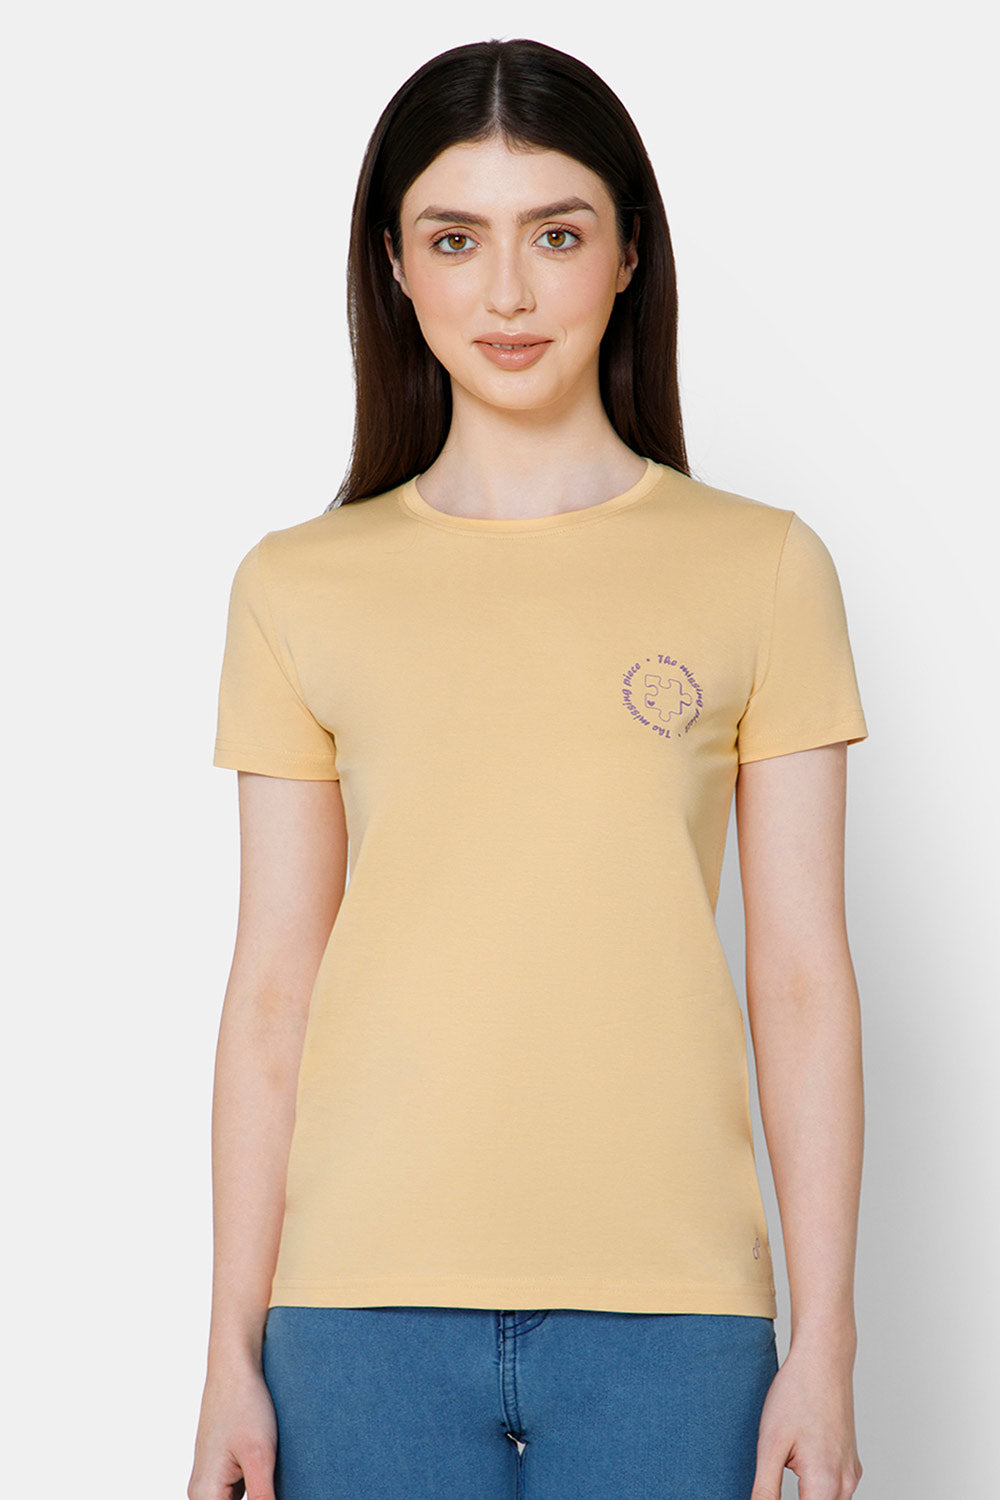 Jusperf Women's Printed Crew Neck Casual T-Shirt - Beige - TS30